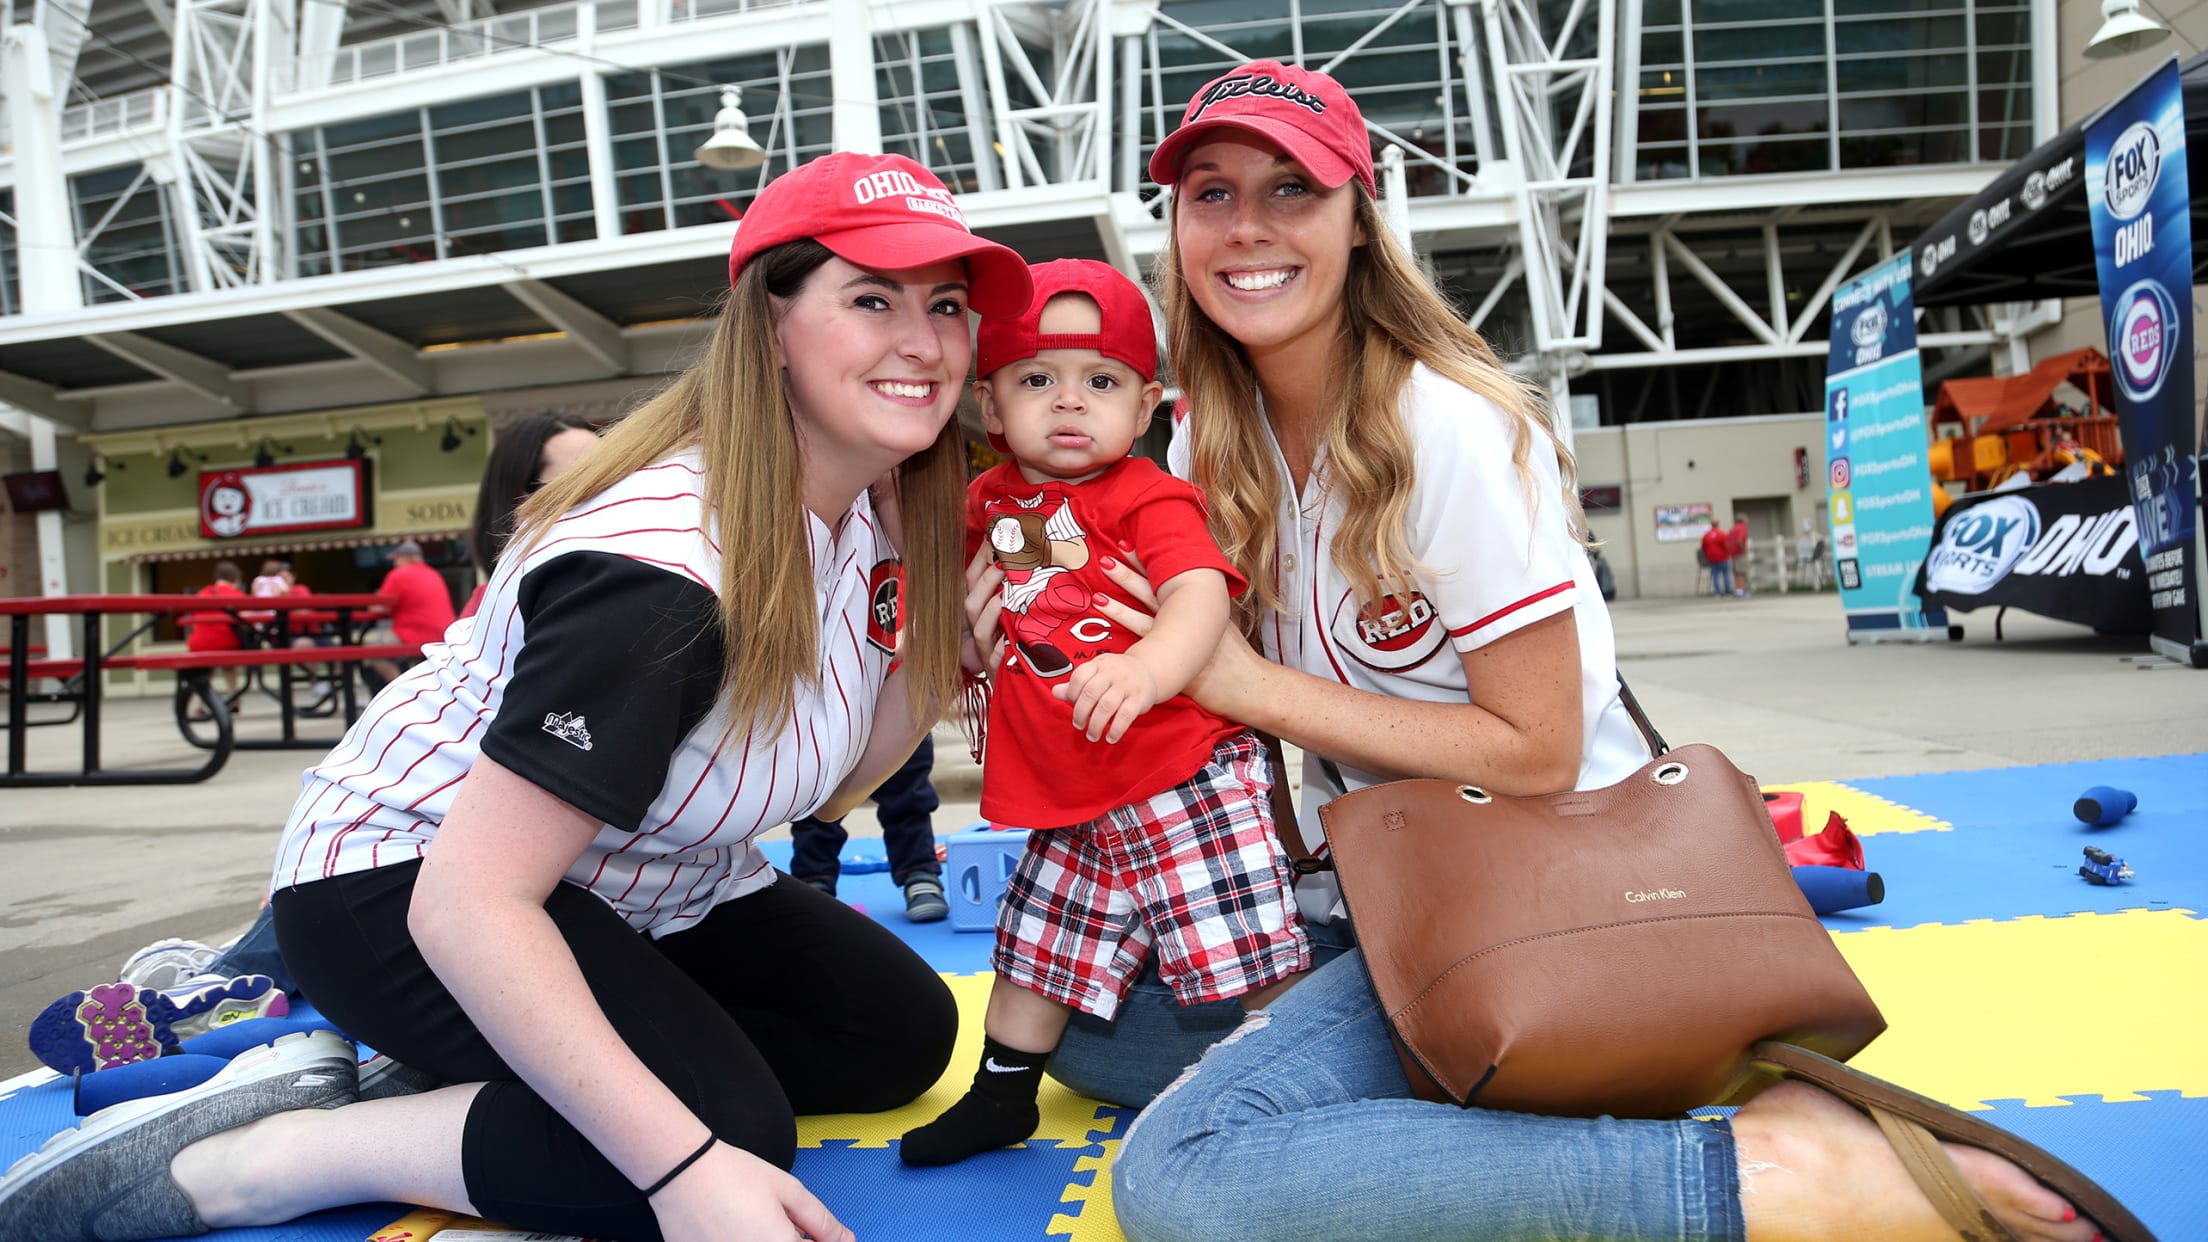 Cincinnati Reds Debut Stadium Nursery for Mom-Baby Baseball Fans - ABC News